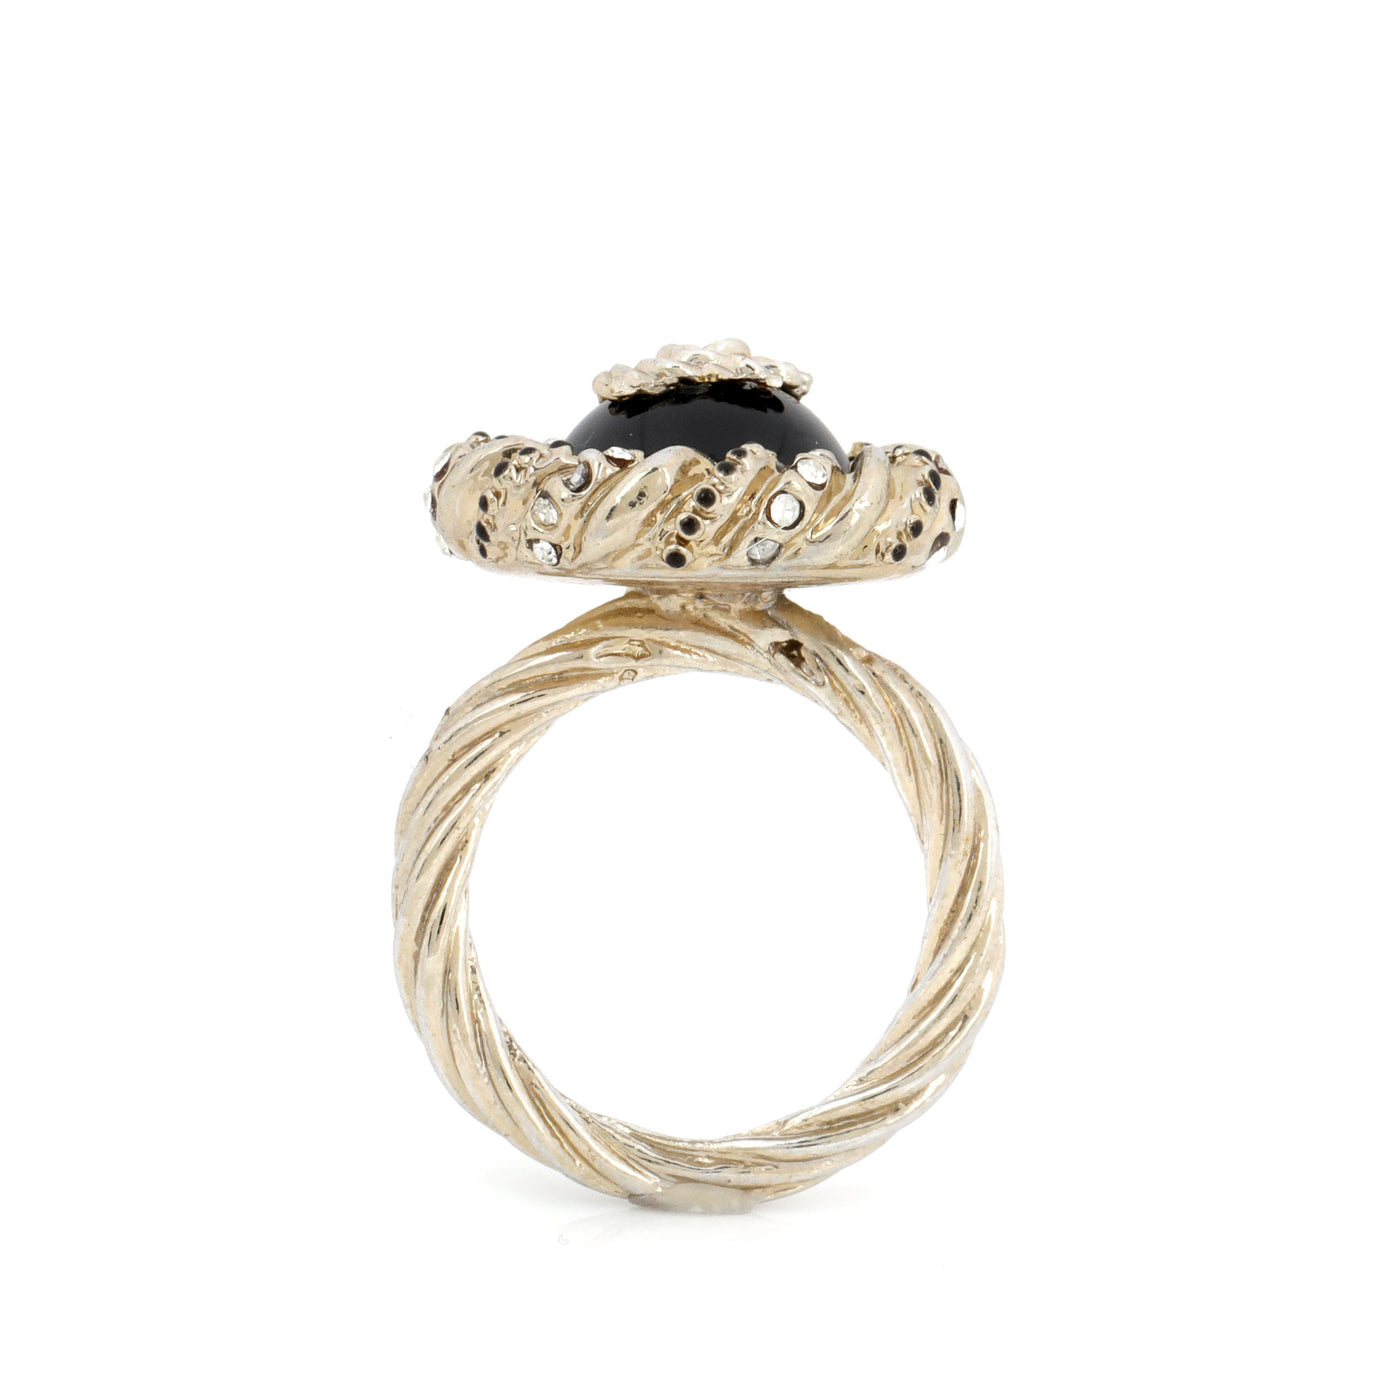 Chanel Black Enamel Ring w/ CC Center & Silver Hardware